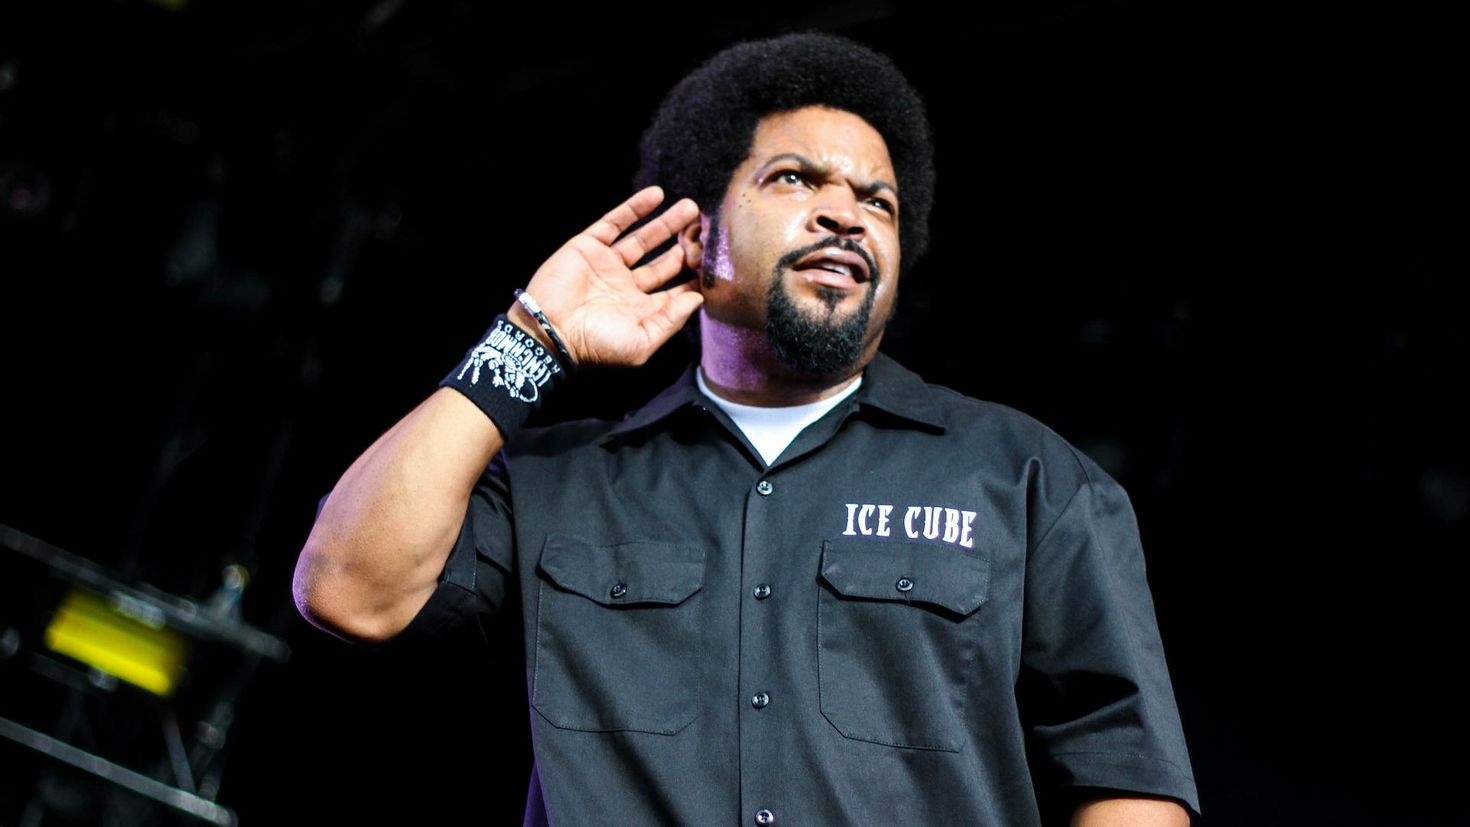 Ice cube feat. Ice Cube Rapper. Айс Кьюб (Ice Cube). Ice Cube 2011. Ice Cube 2000.